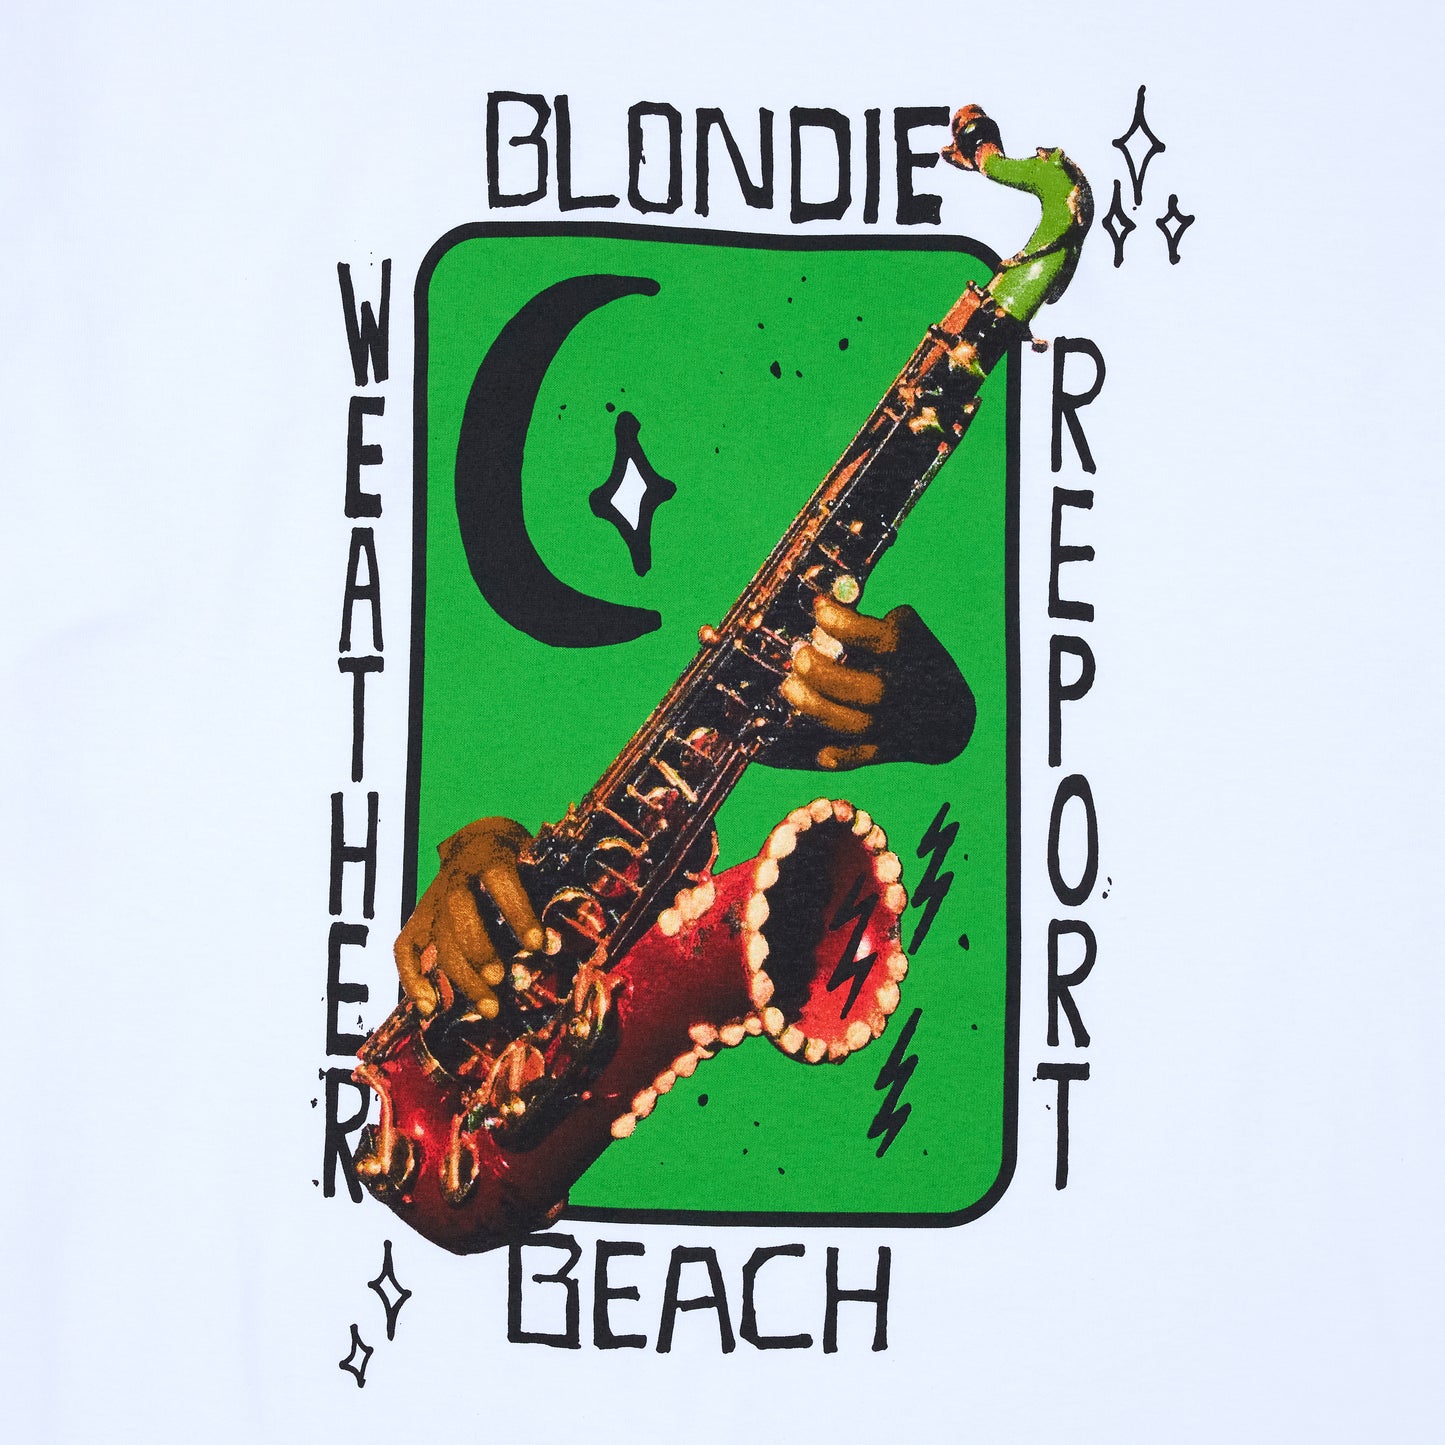 BLONDIE BEACH T-SHIRT